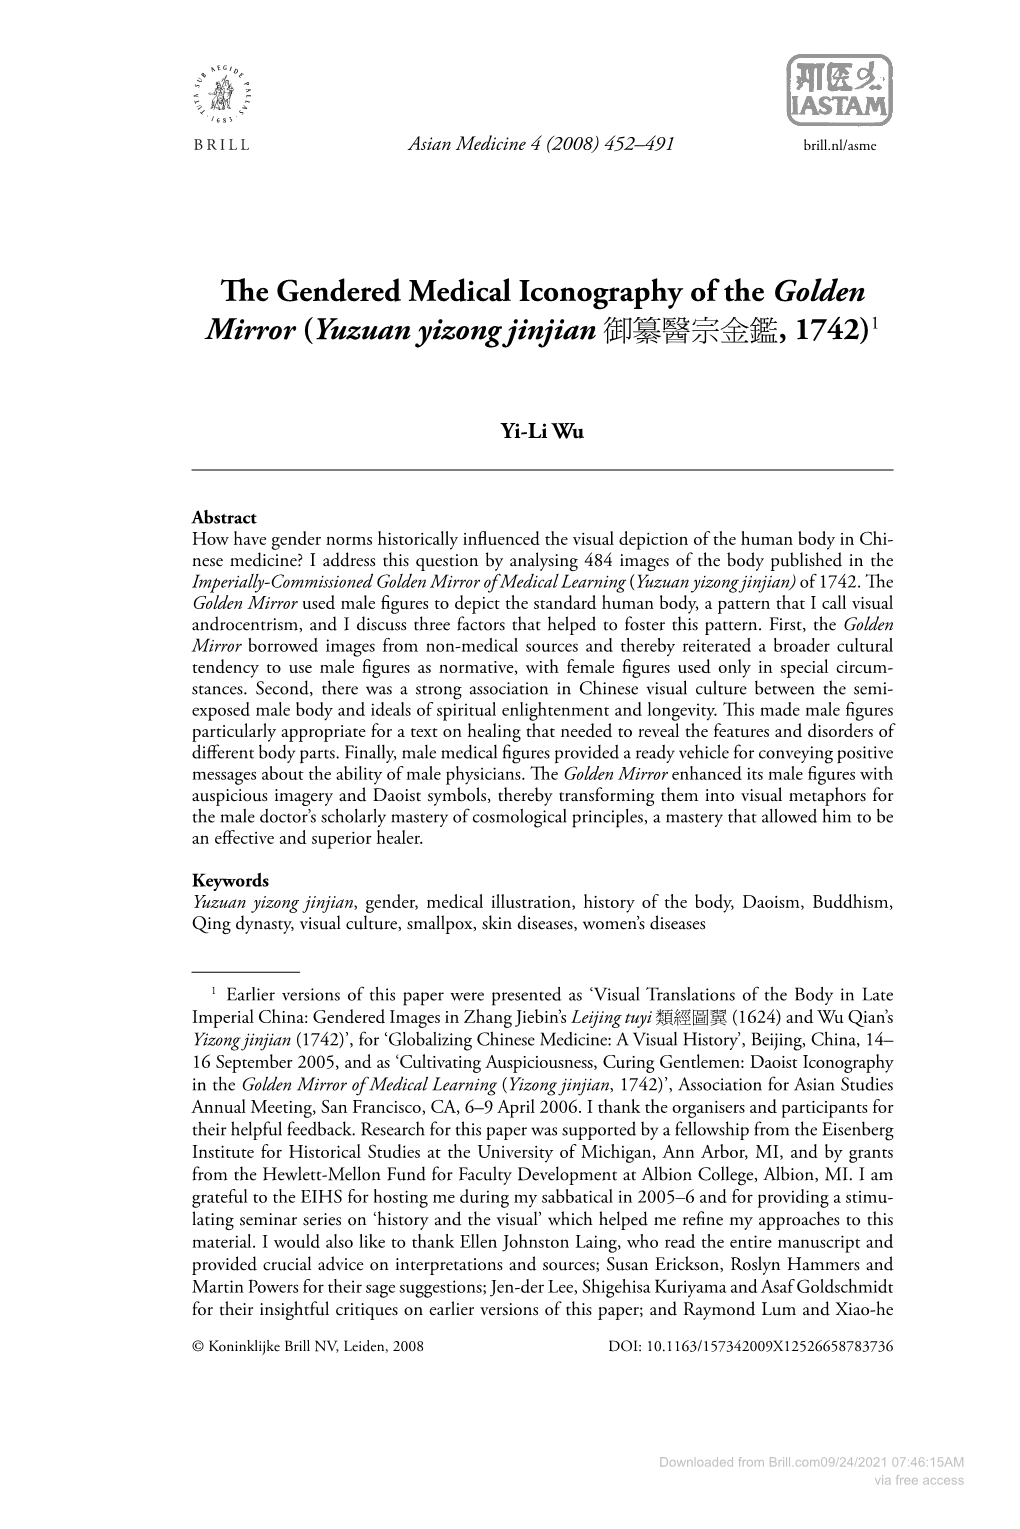 The Gendered Medical Iconography of the &lt;I&gt;Golden Mirror&lt;/I